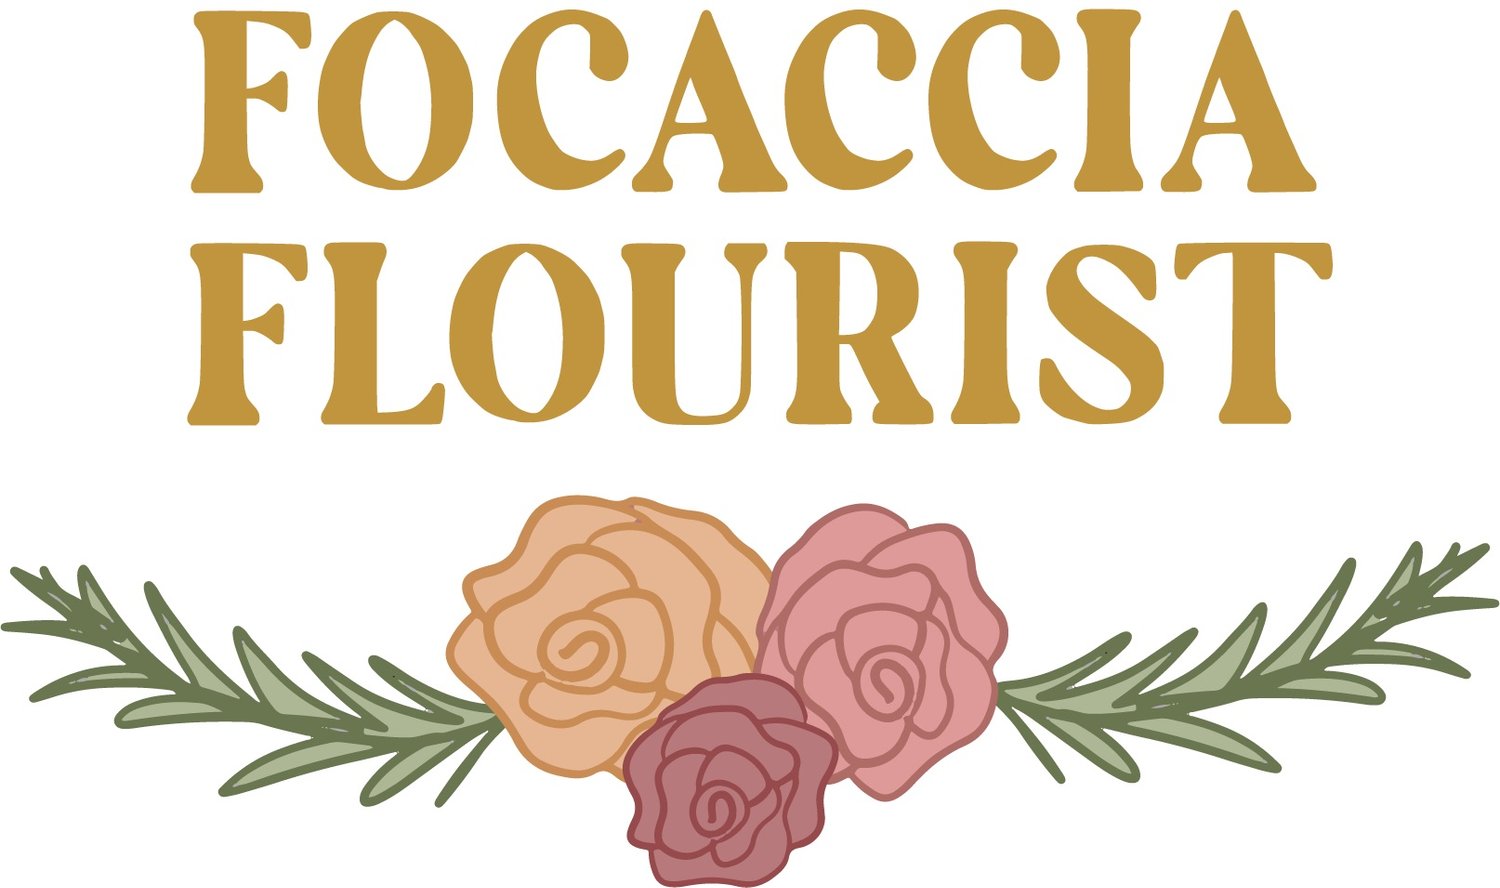 Focaccia Flourist 